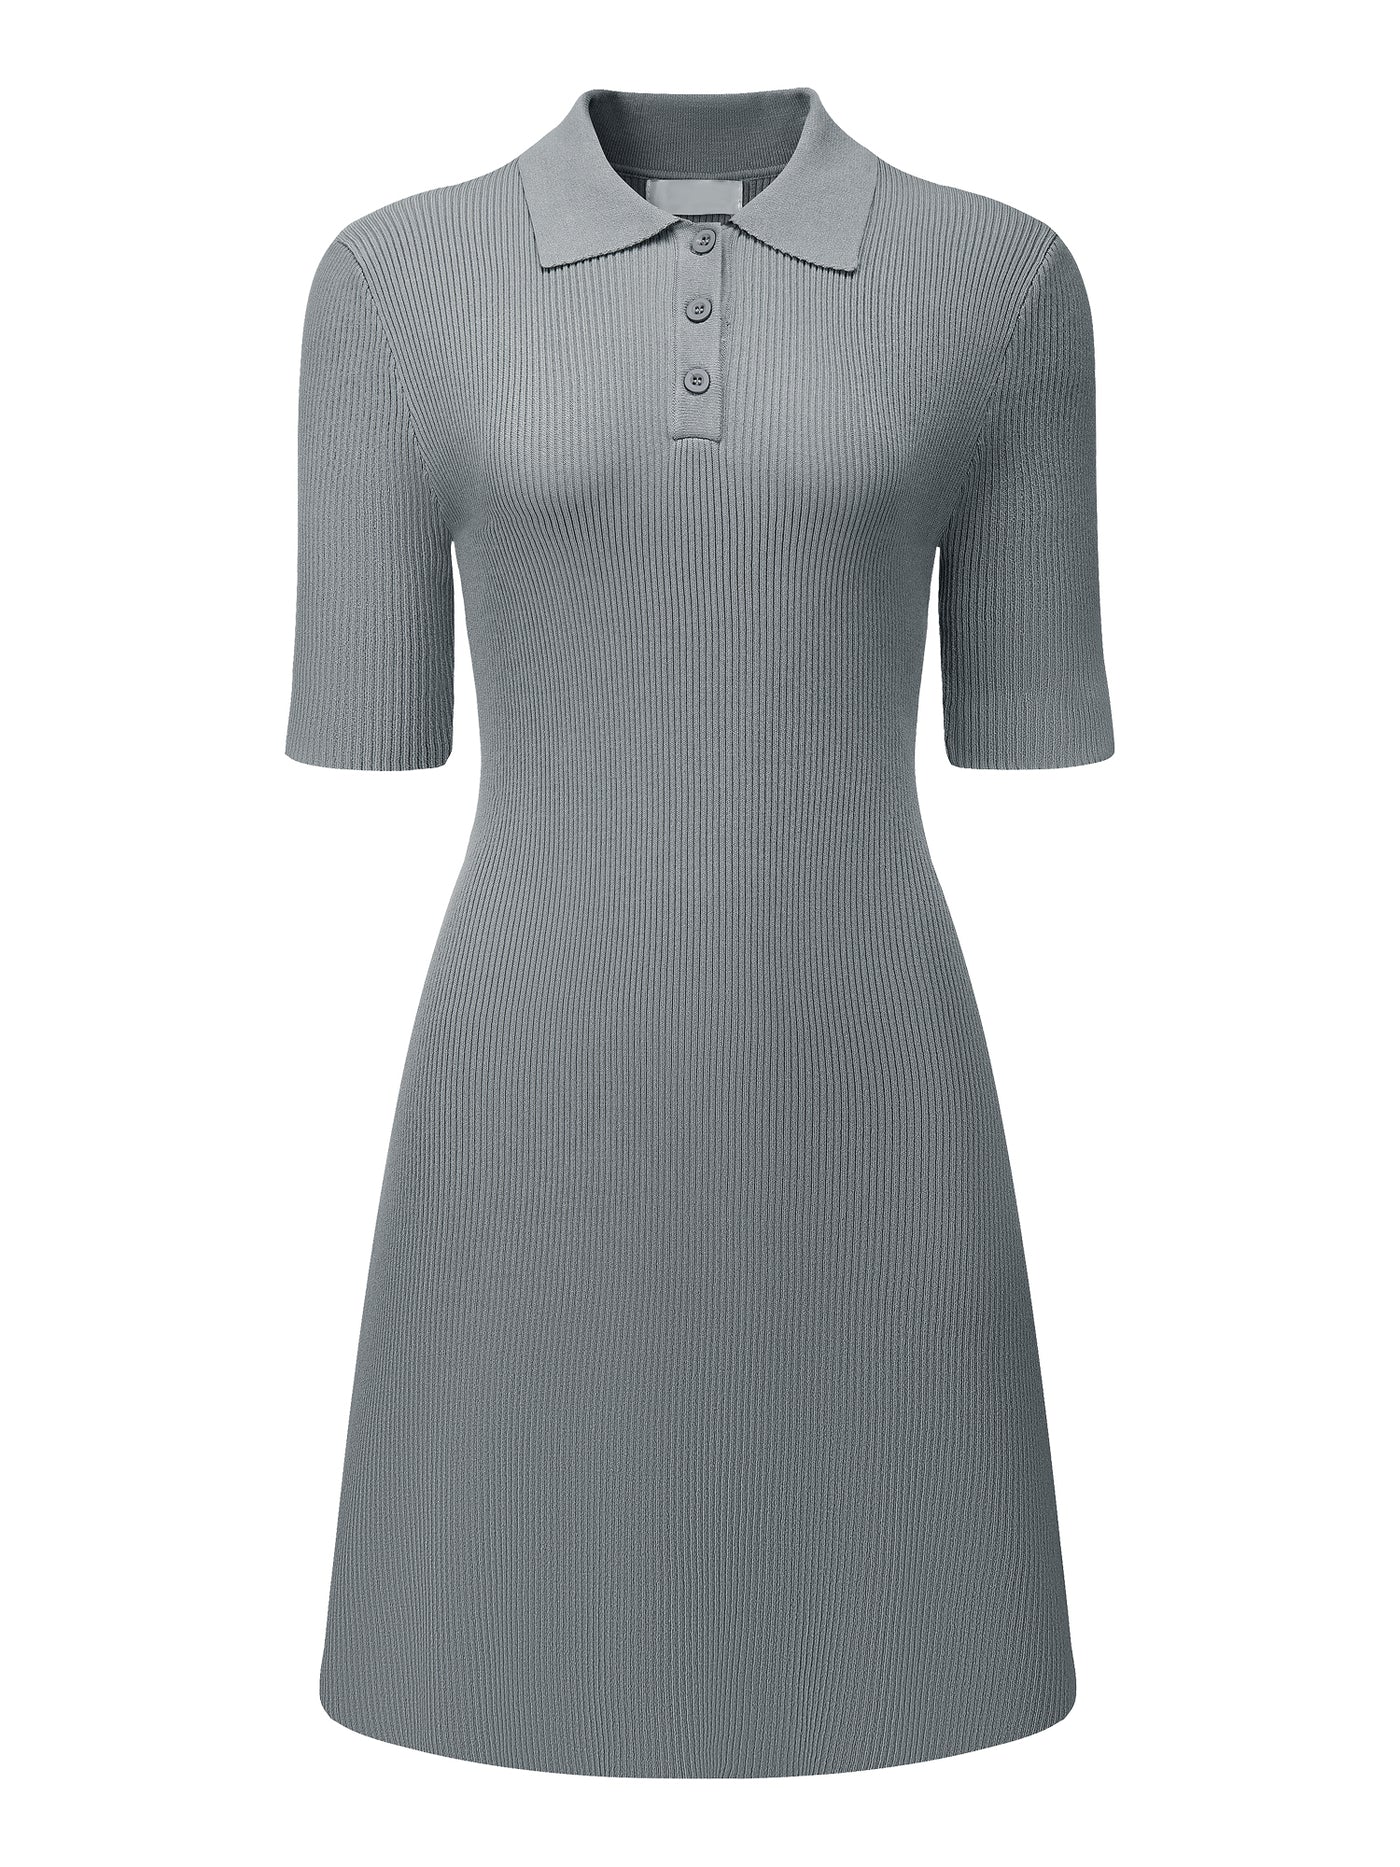 Bublédon Women's Sweater Dress Lapel Collar Short Sleeve Casual Knit Polo Dresses